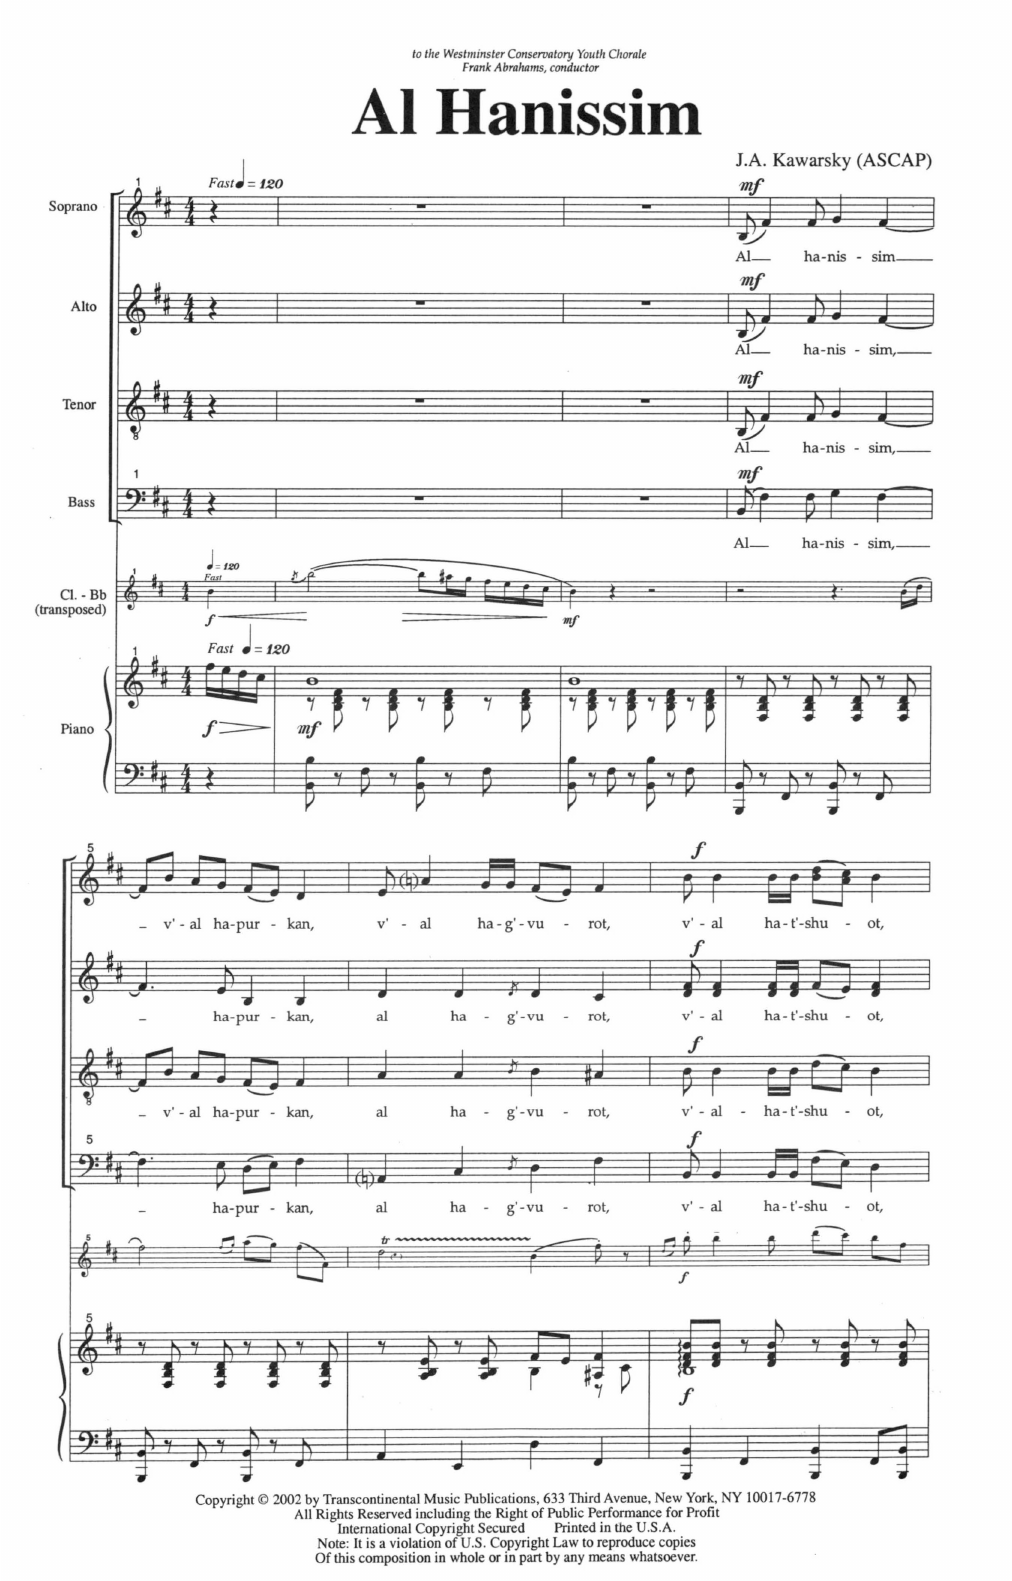 J.A. Kawarsky Al Hanissim (Chanukah Song) Sheet Music Notes & Chords for SATB - Download or Print PDF